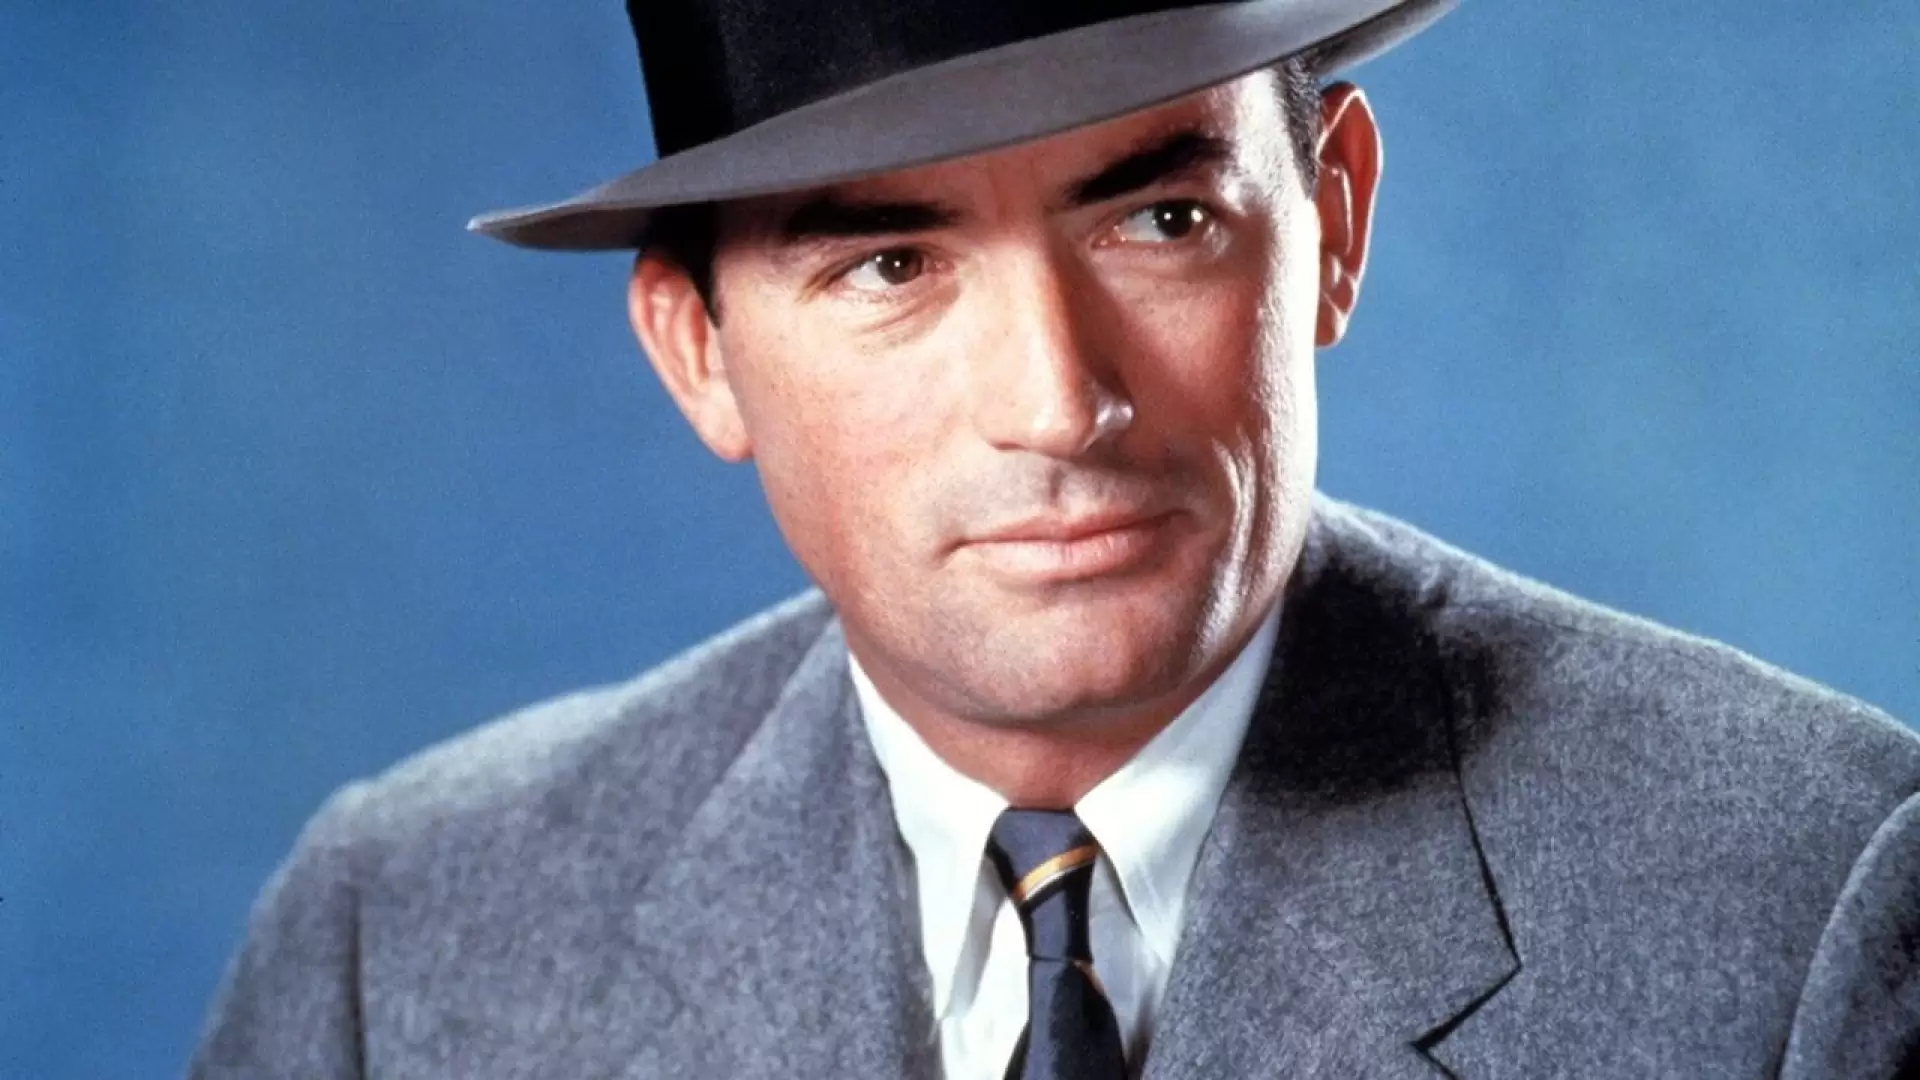 دانلود فیلم The Man in the Gray Flannel Suit 1956